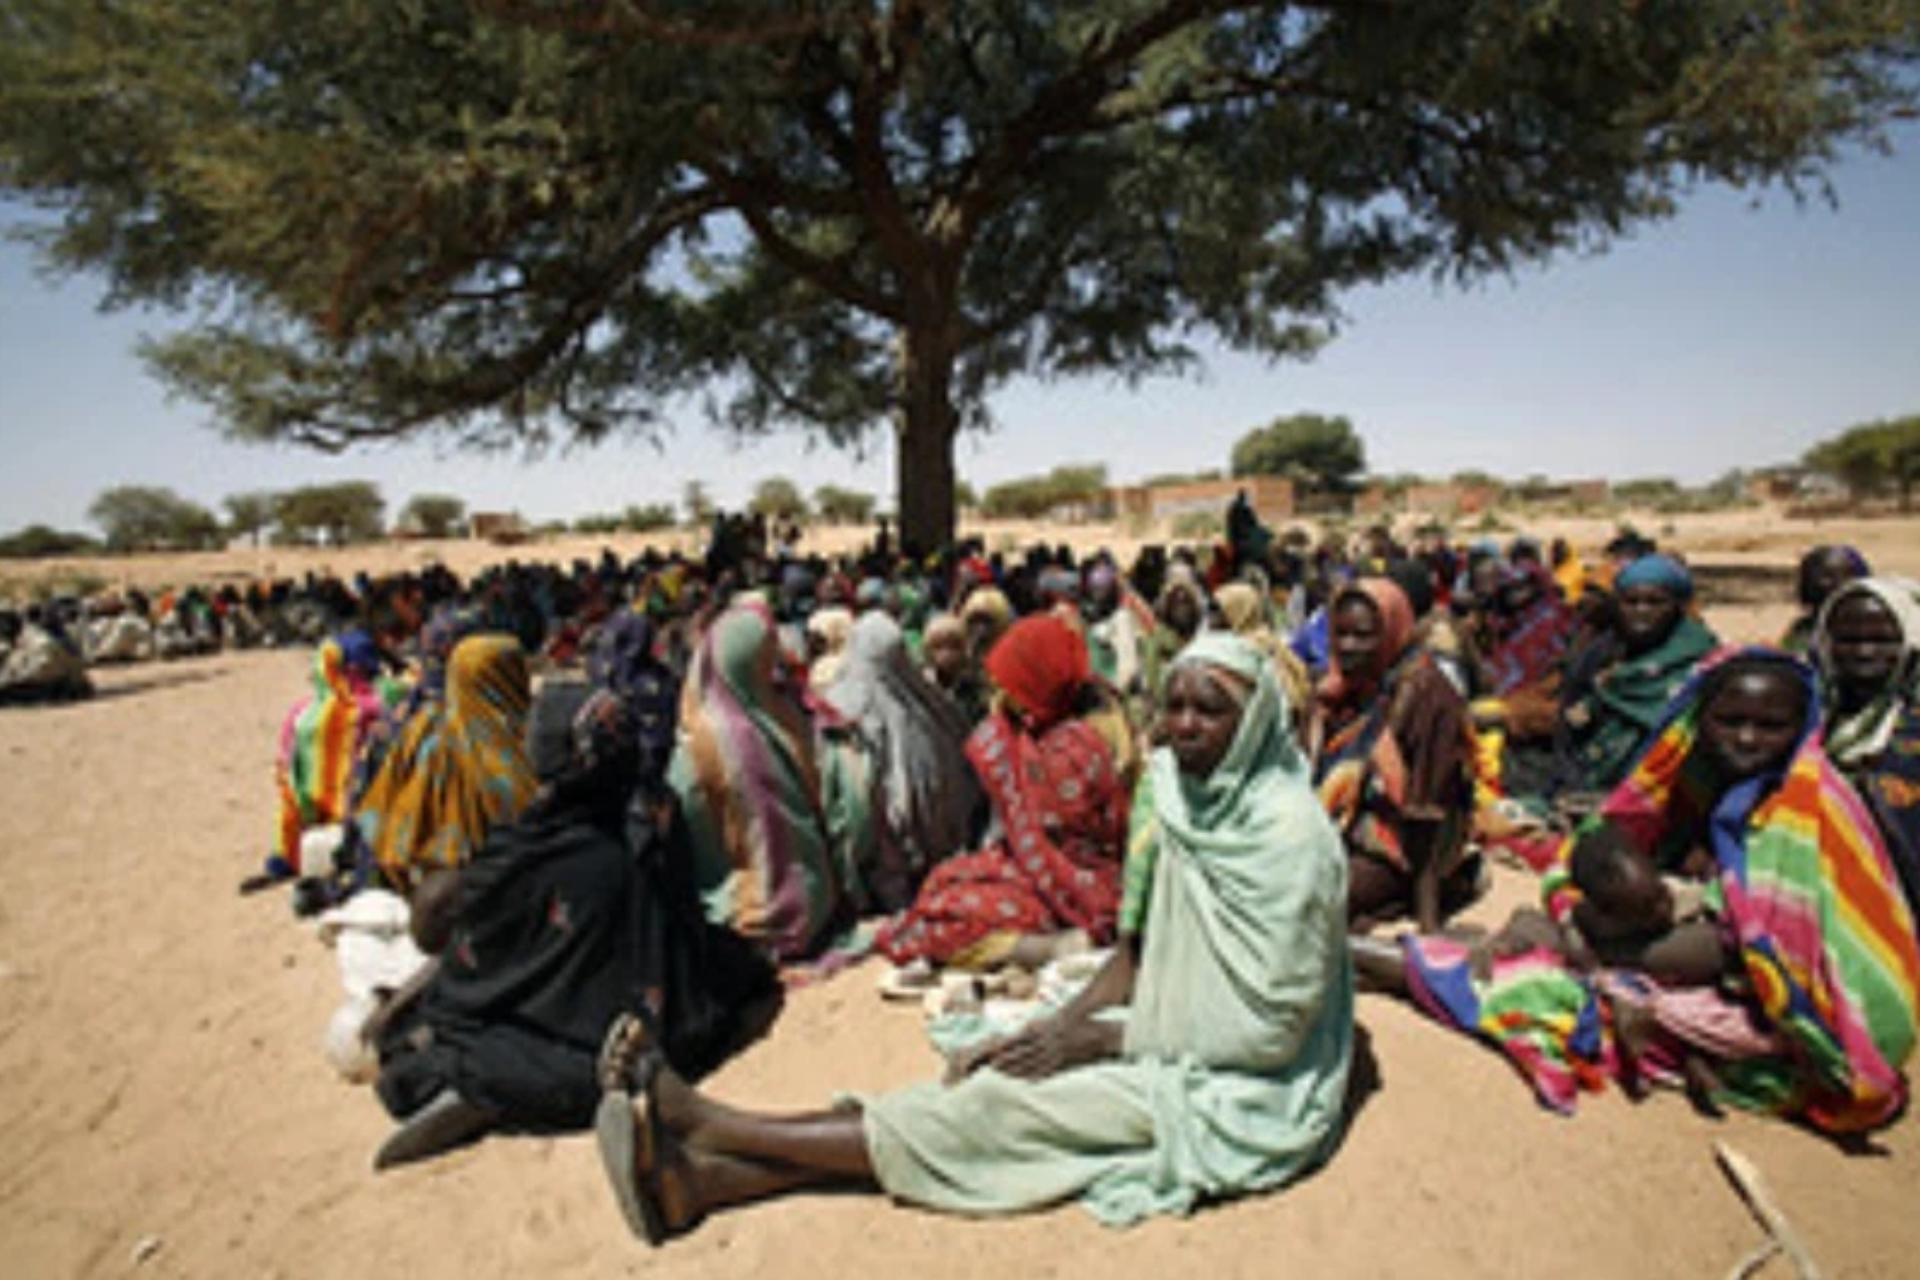 Darfur residents flee